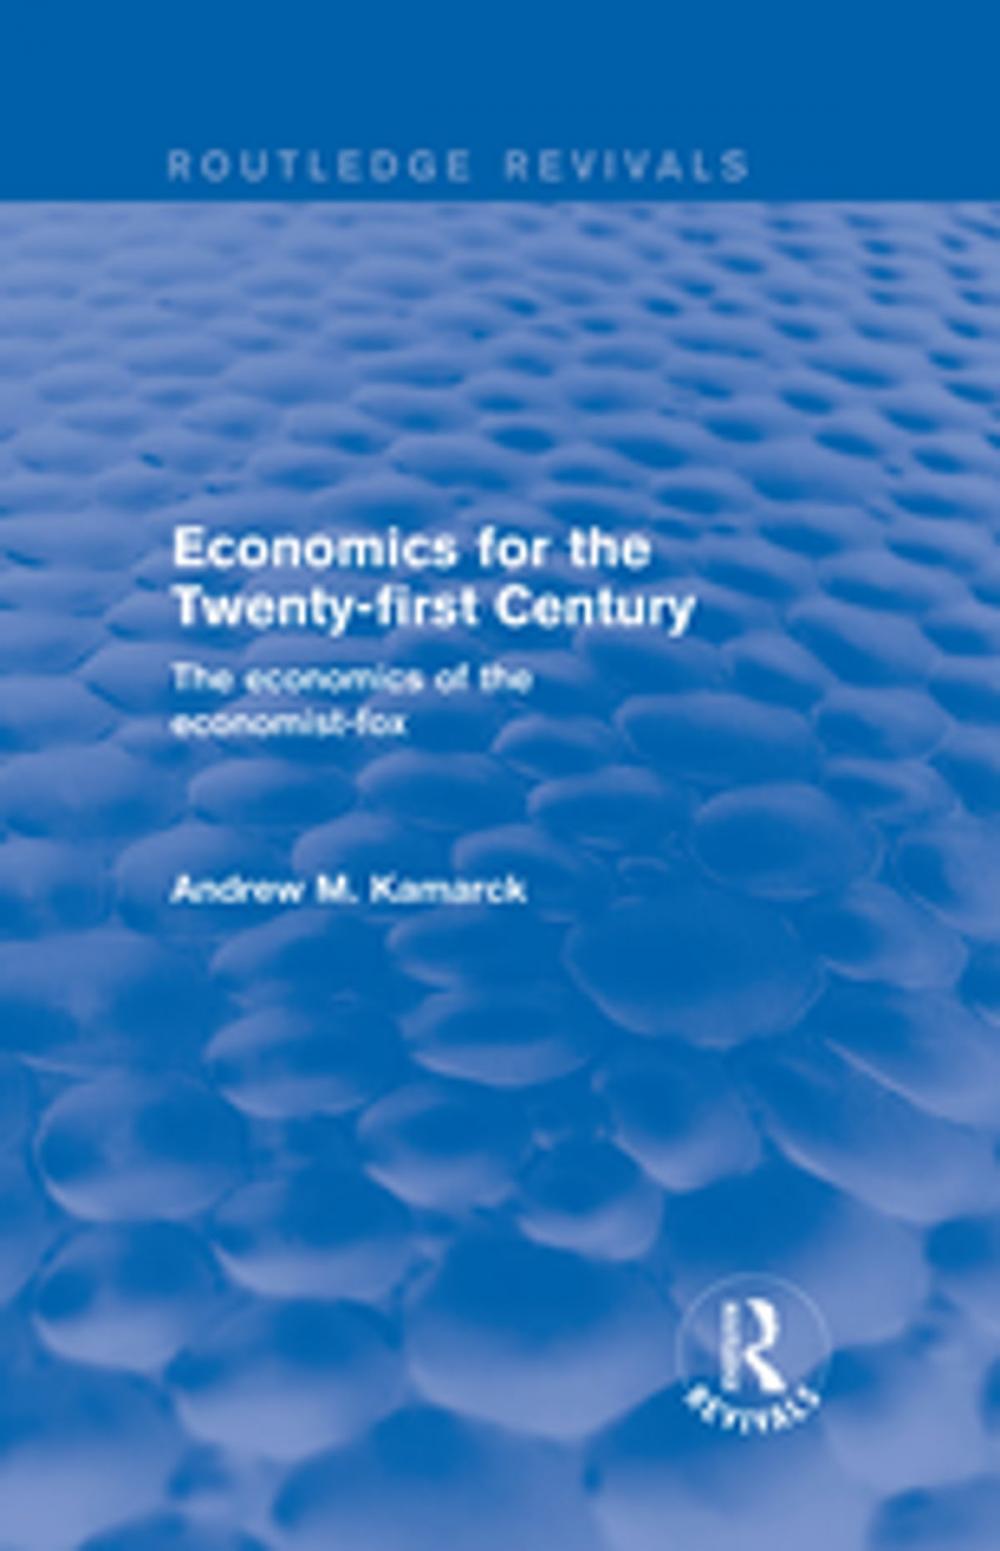 Big bigCover of Economics for the Twenty-first Century: The Economics of the Economist-fox